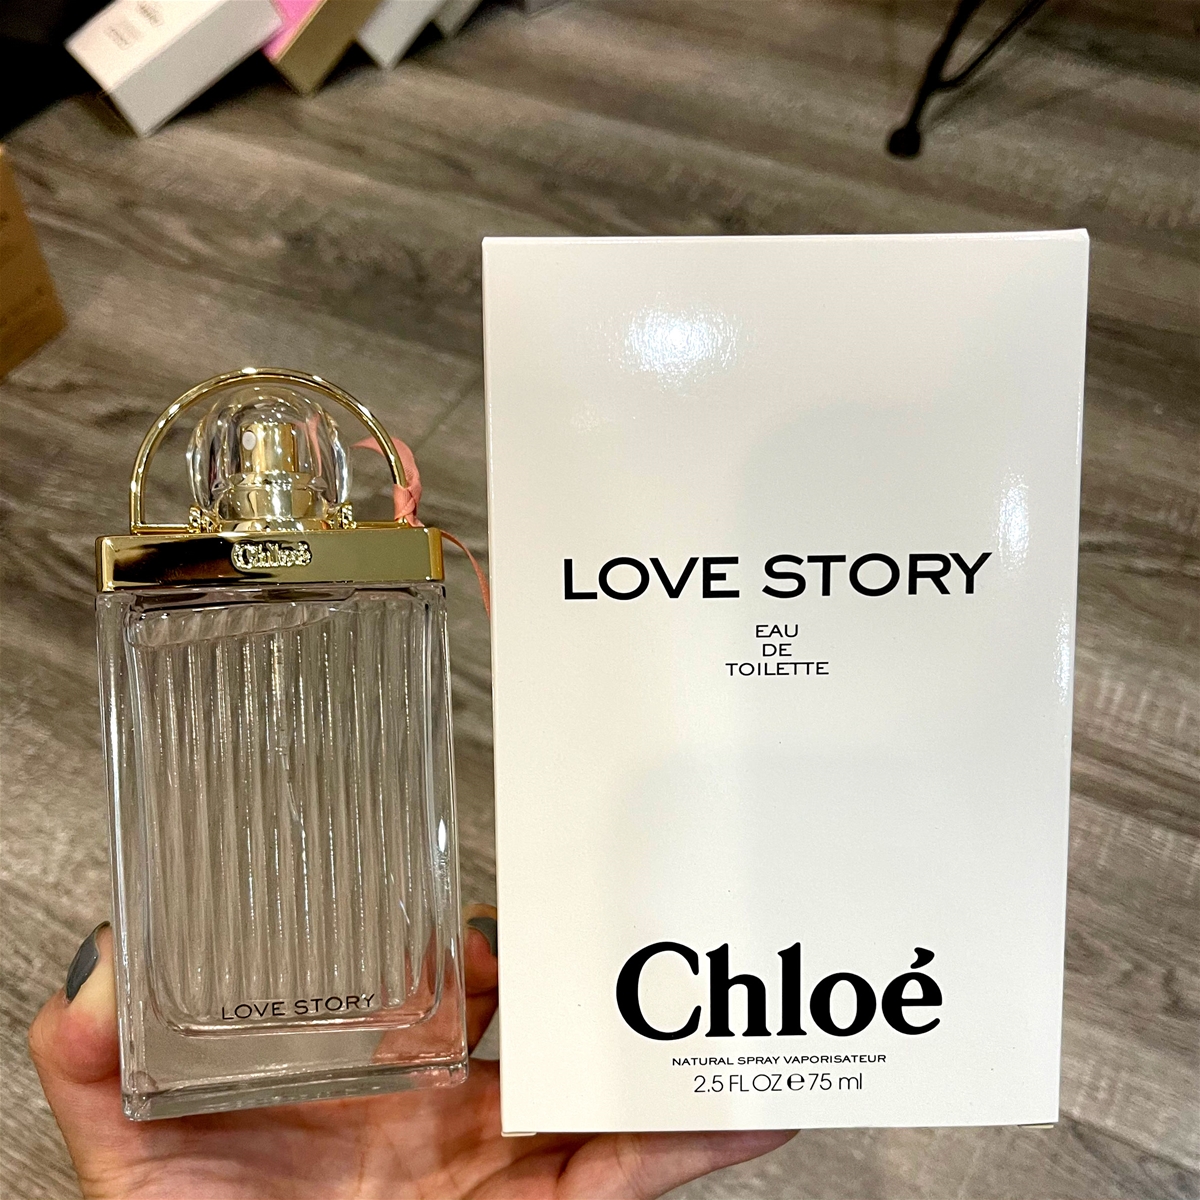 Nước hoa Chloe Love story super